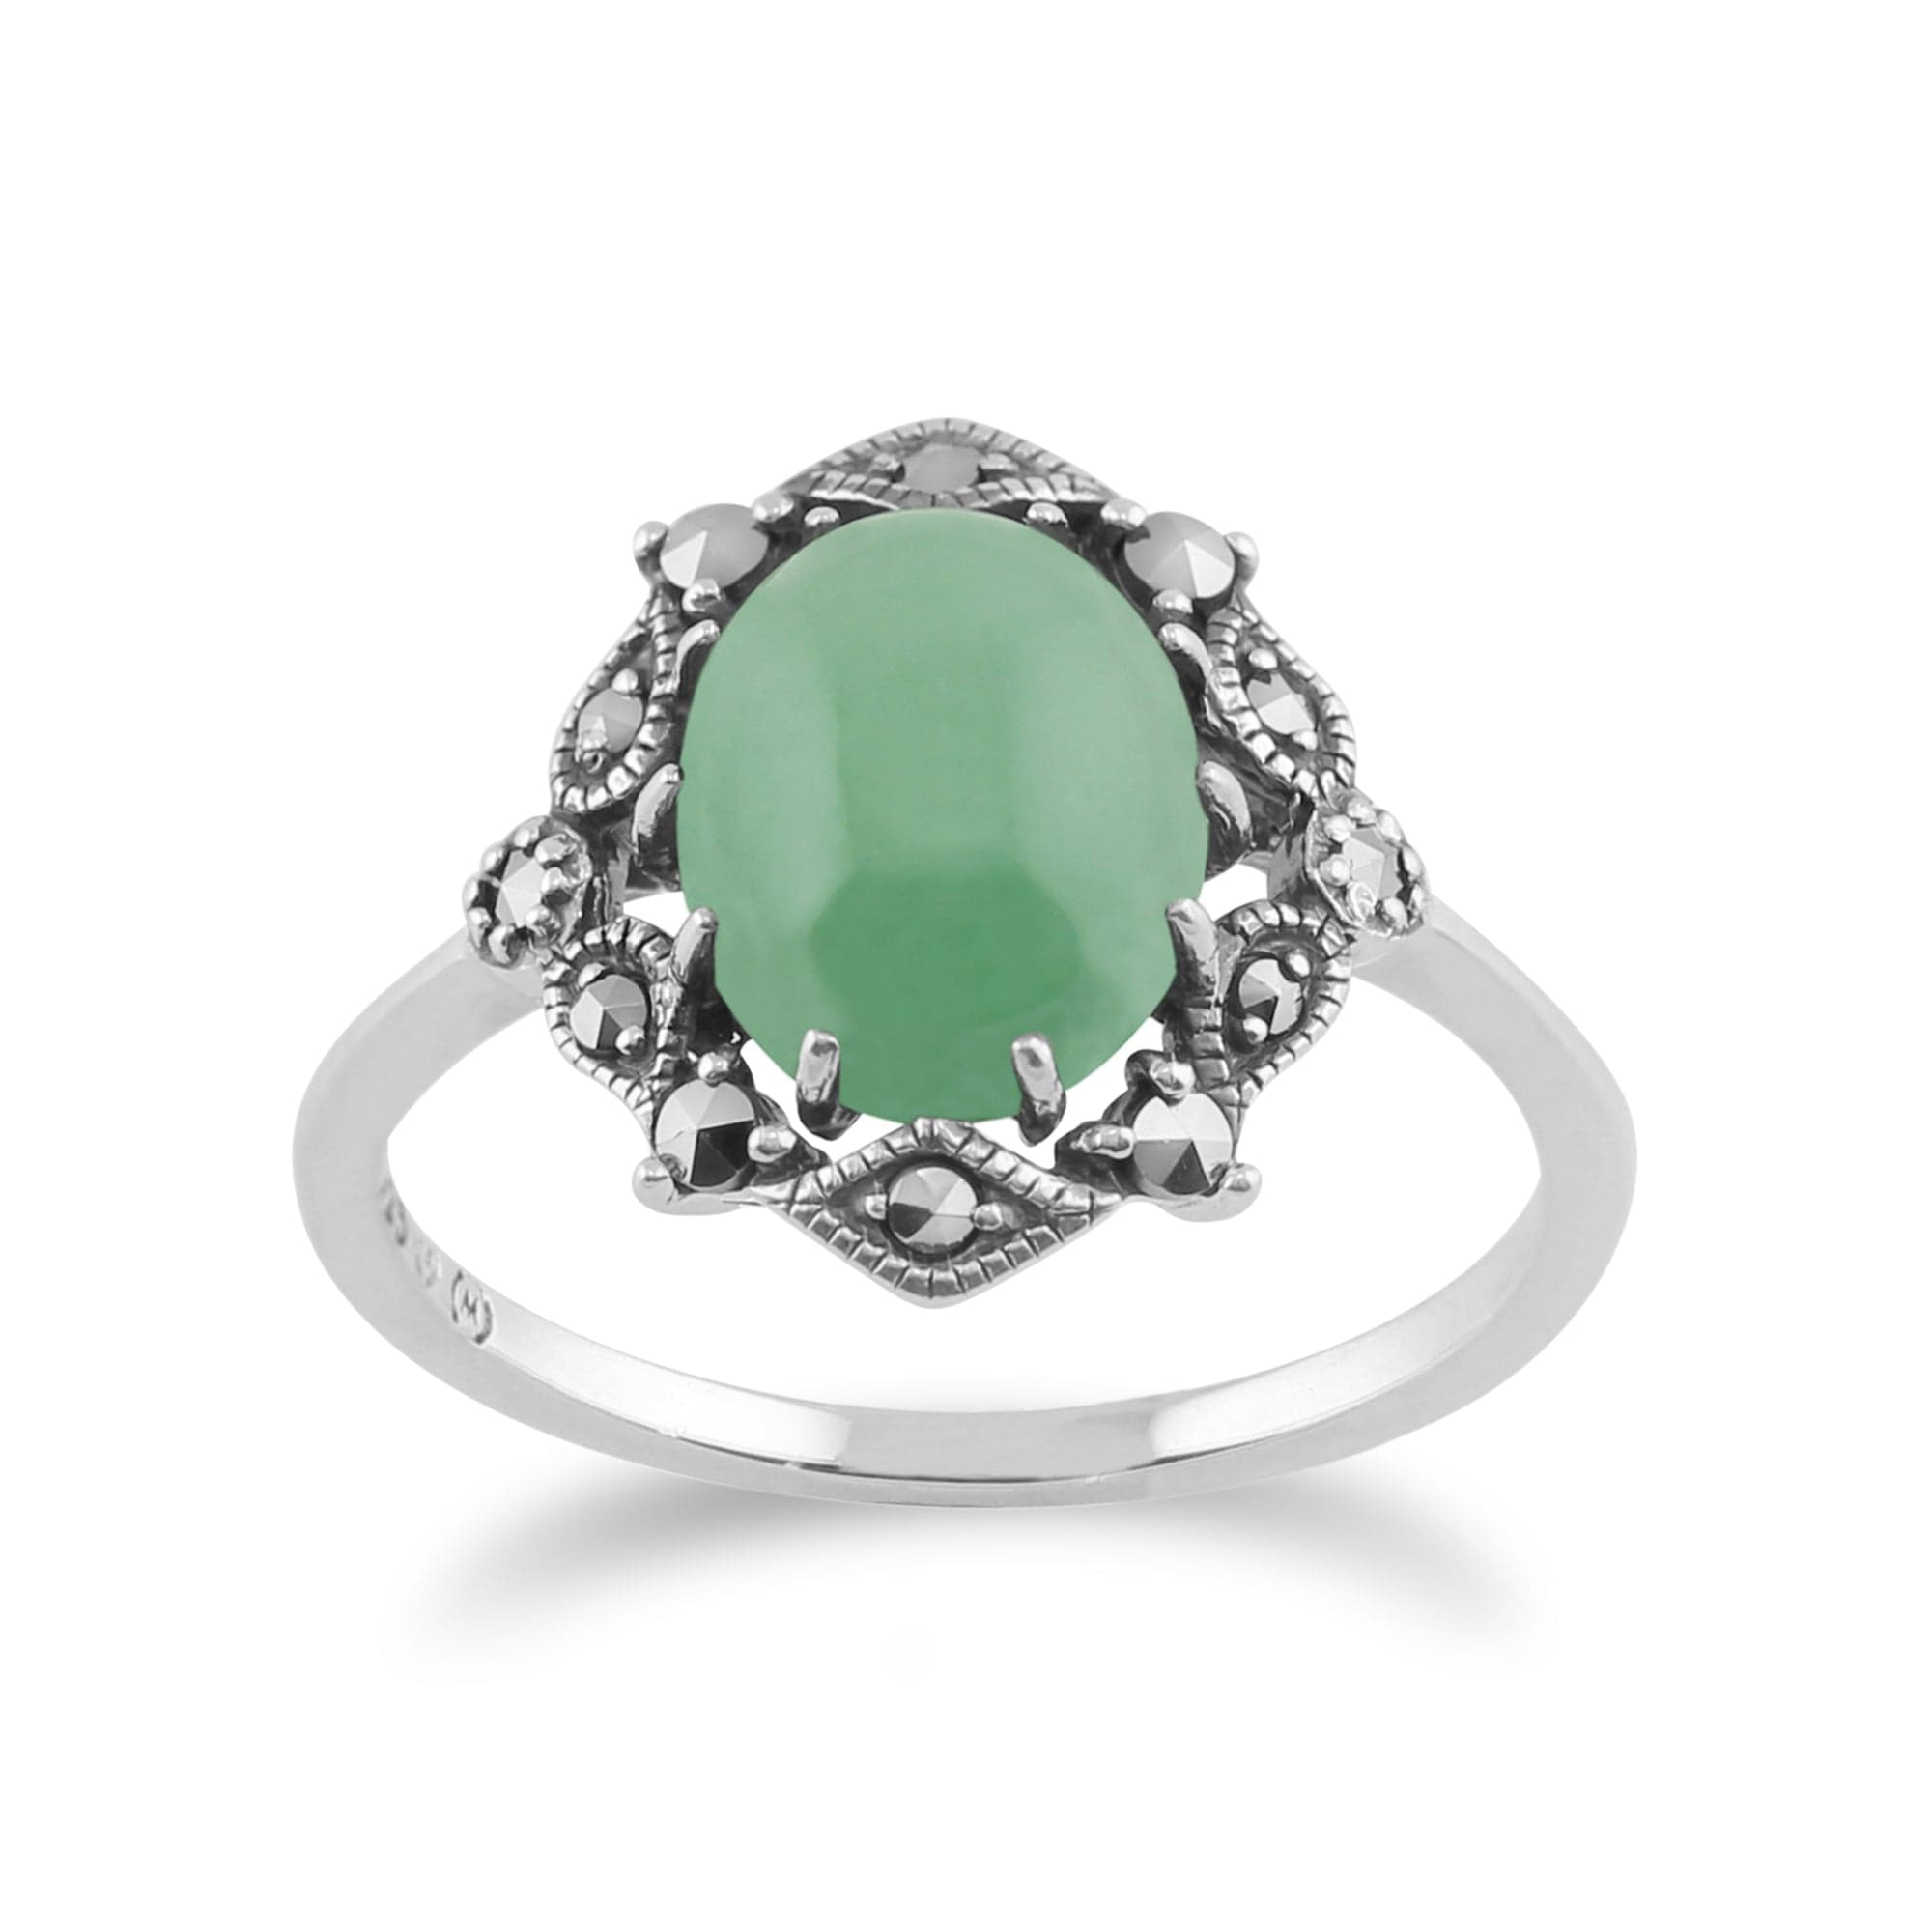 Ring Art Nouveau Jade Marcasite